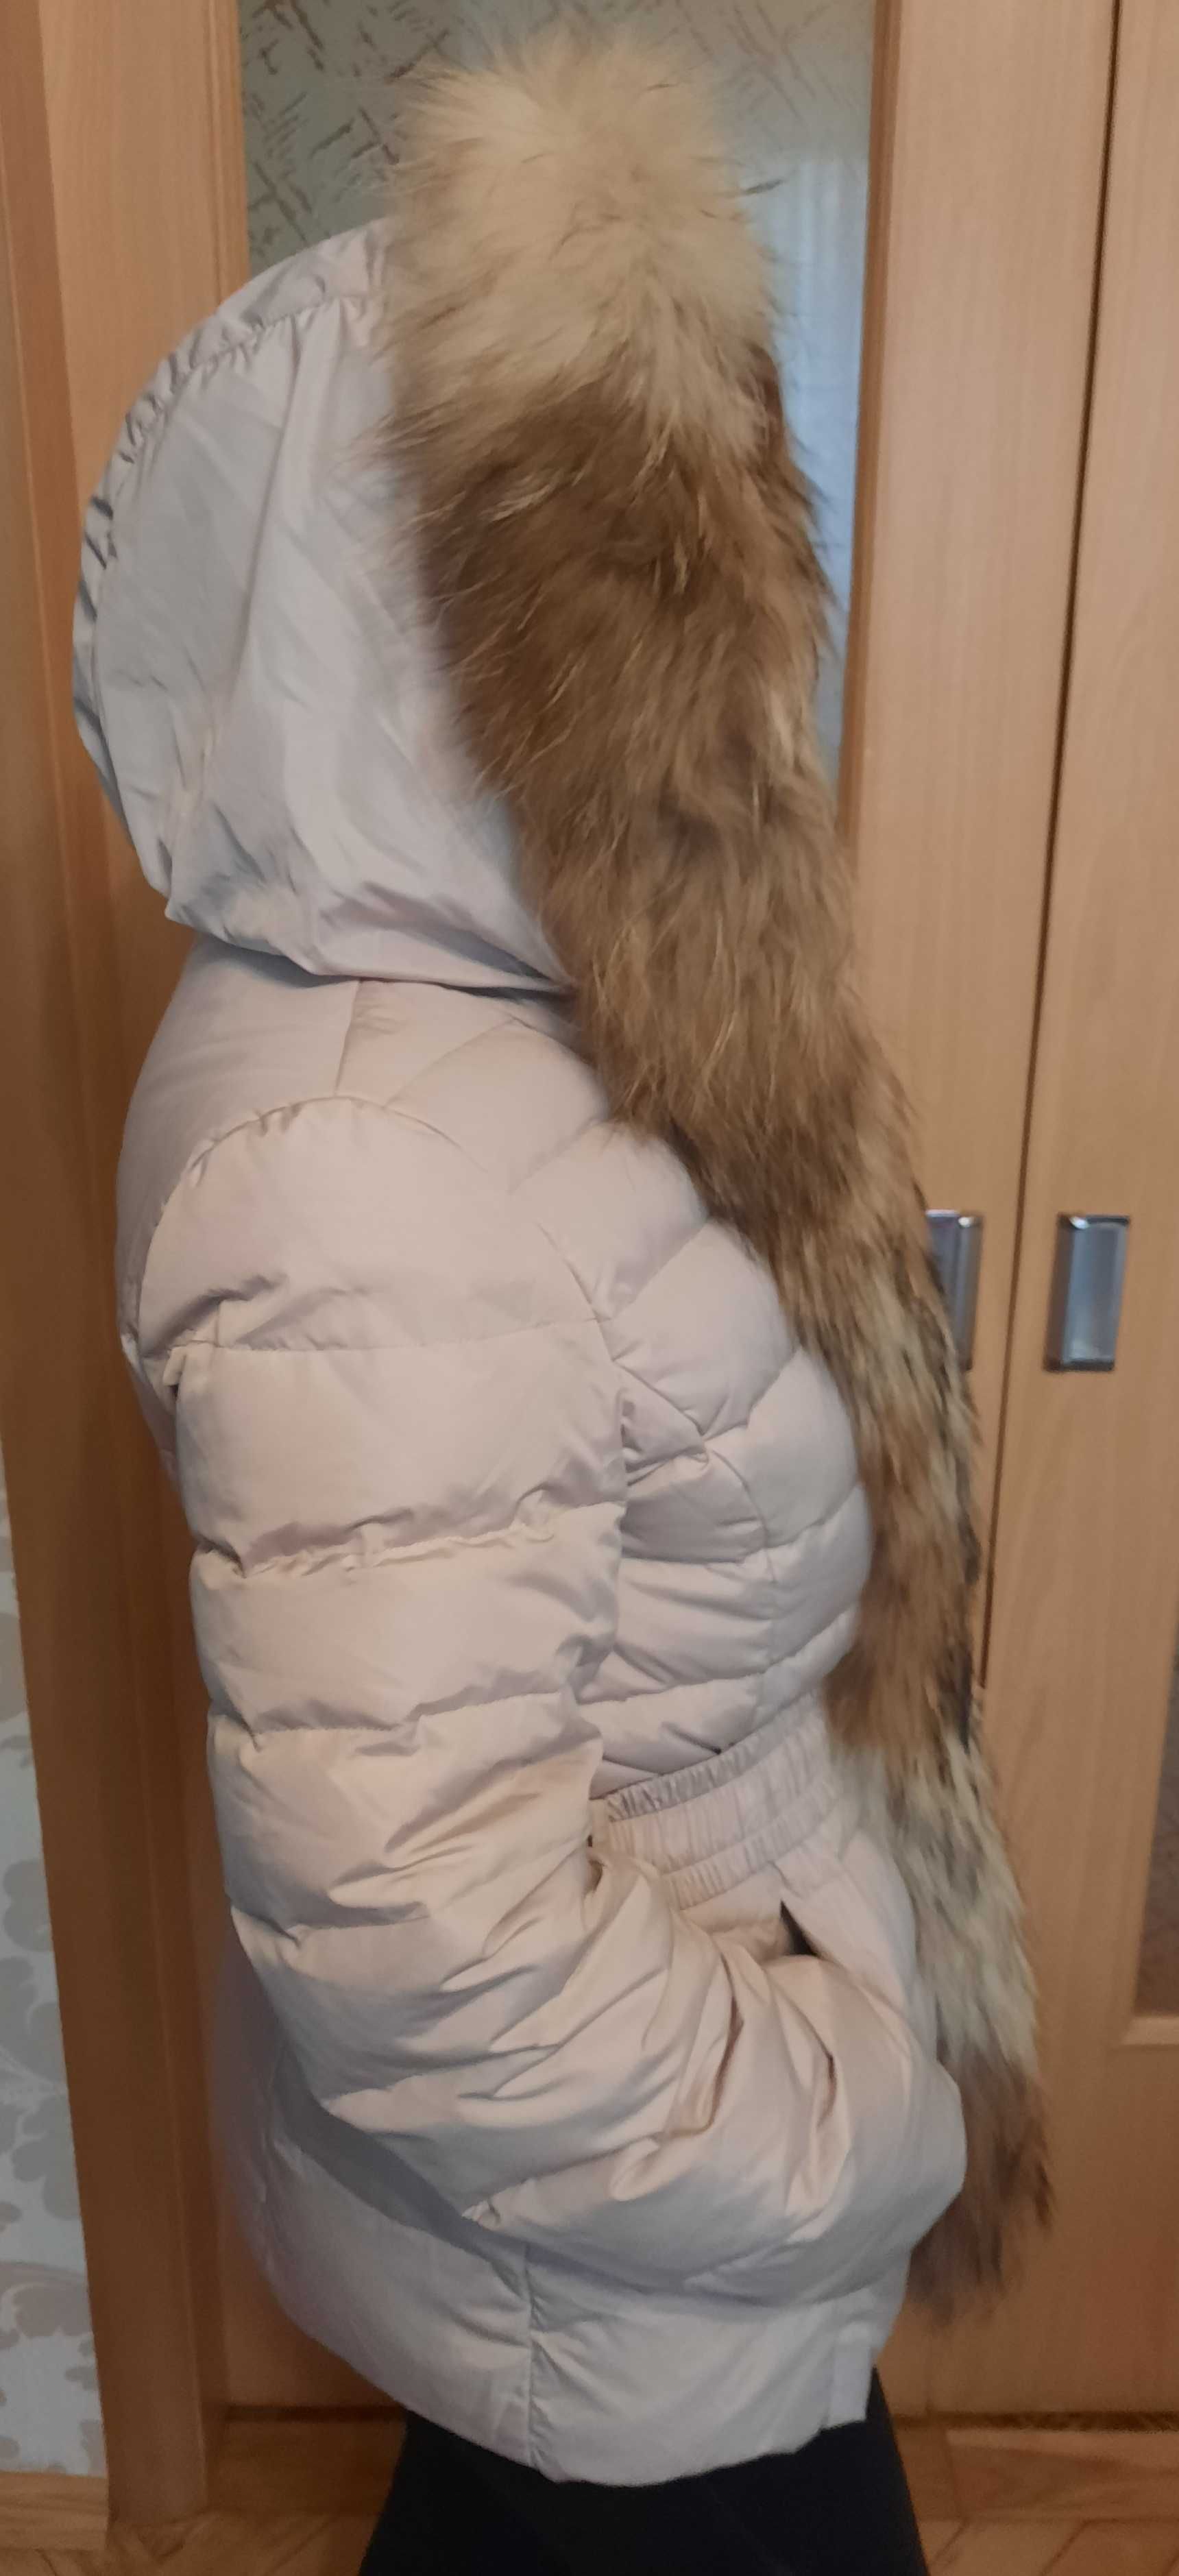 Зимняя куртка KEO (мех натуральный) размер L